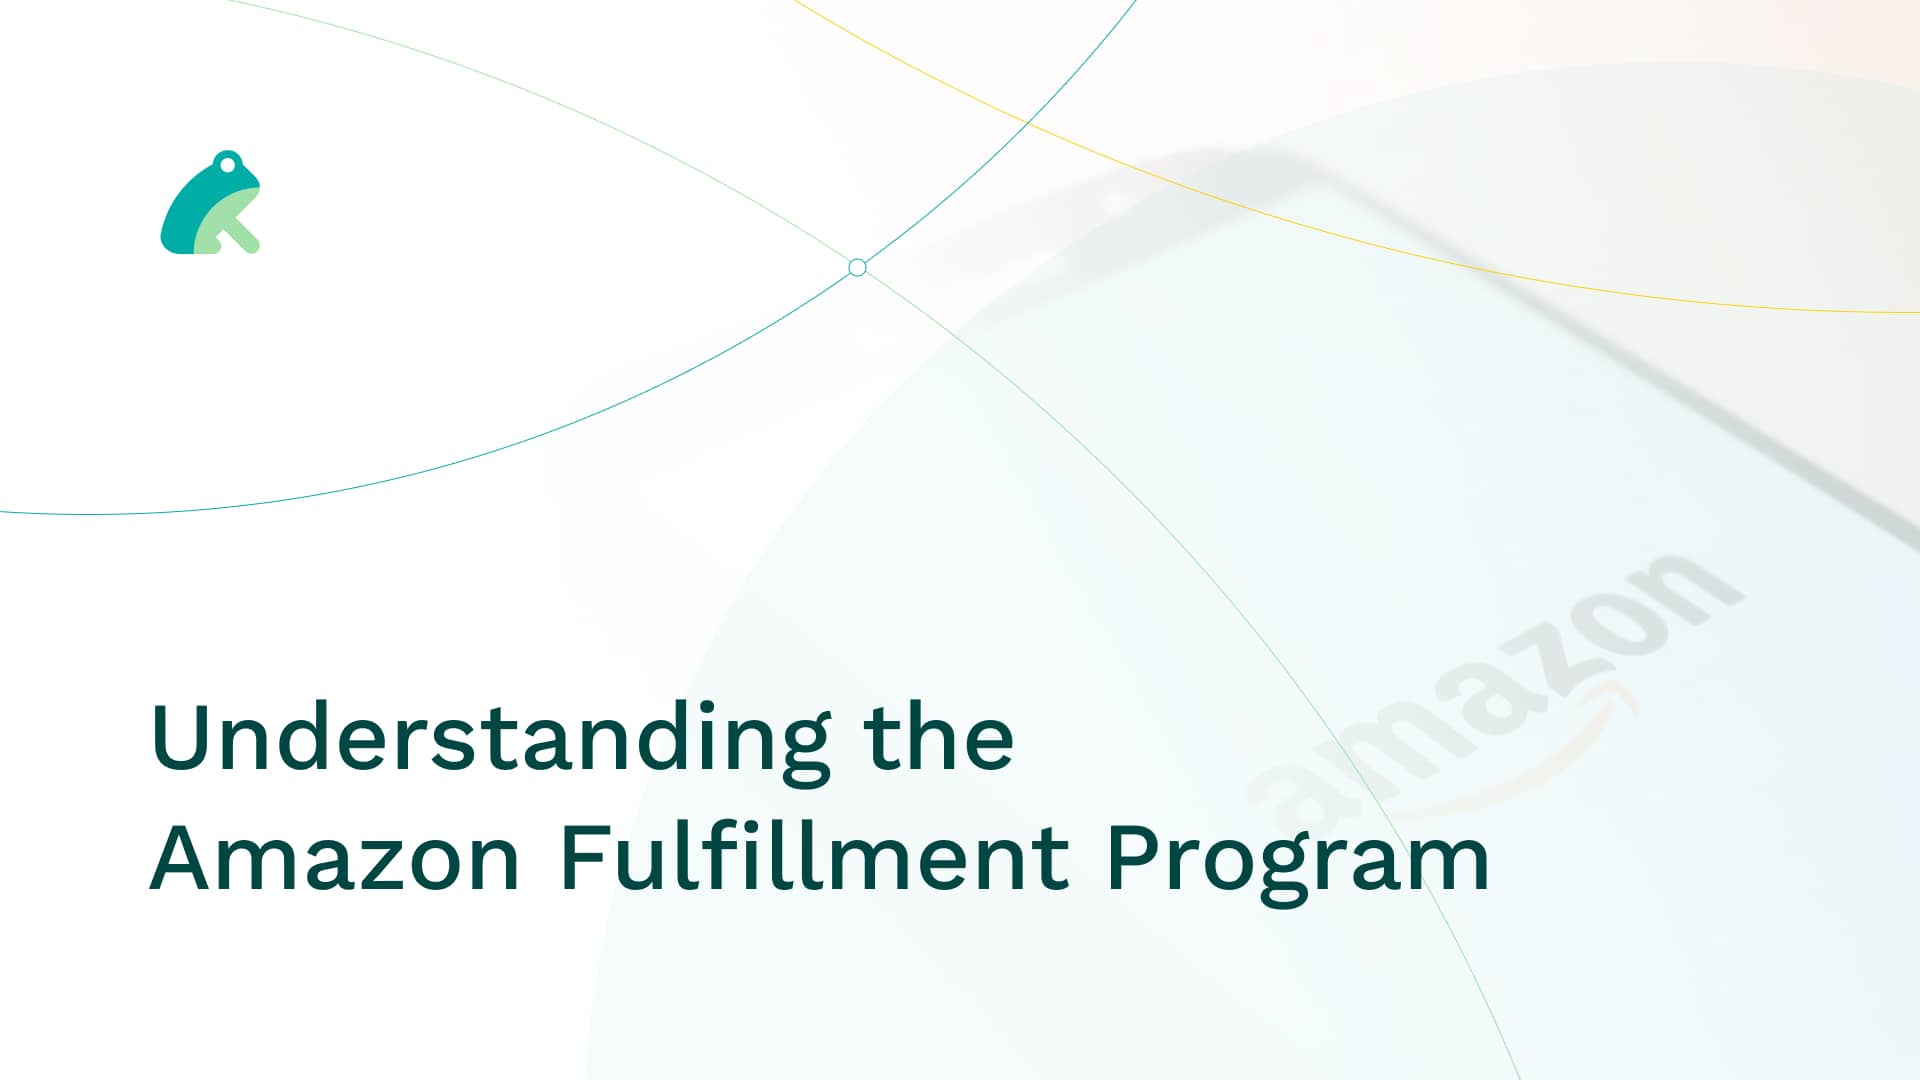 Understanding "Fulfilled by Amazon": The Amazon Fulfillment Program